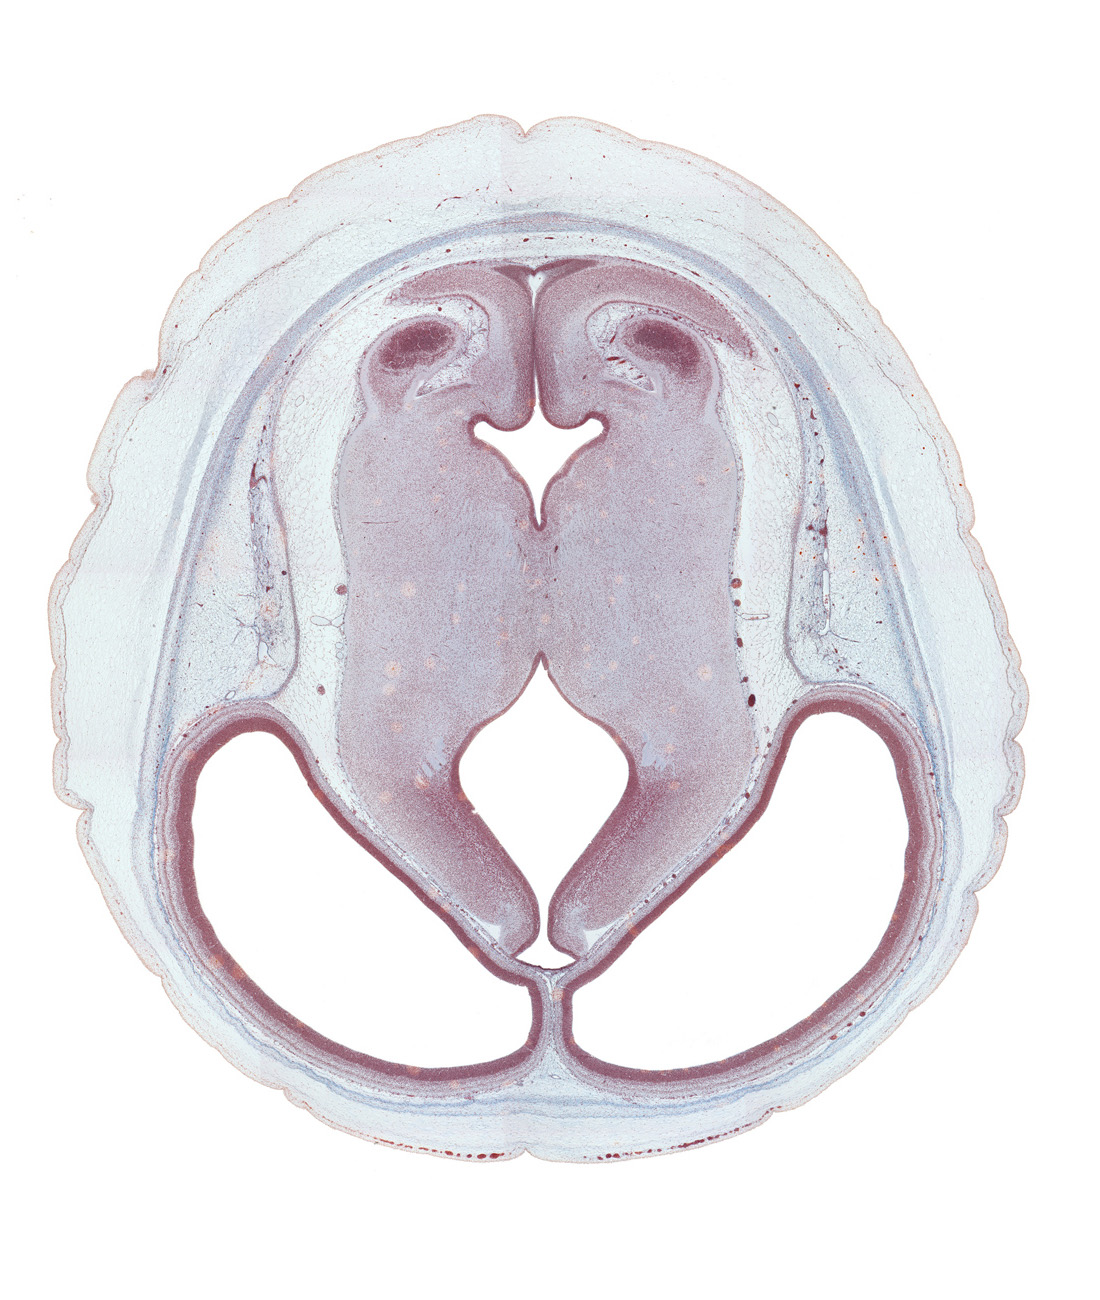 basis pedunculi of pons region (metencephalon), caudal edge of inferior colliculus, caudal part of cerebral aqueduct, cephalic part of cerebellum, cephalic part of rhombencoel (fourth ventricle), diencephalic artery, dorsal thalamus, hypothalamic sulcus, isthmus of rhombencephalon, lateral ventricle, median sulcus, mesencephalic artery, mesencephalon, root of trochlear nerve (CN IV), sensory decussation, subcutaneous vascular plexus, sulcus dorsalis, sulcus limitans, ventral thalamus